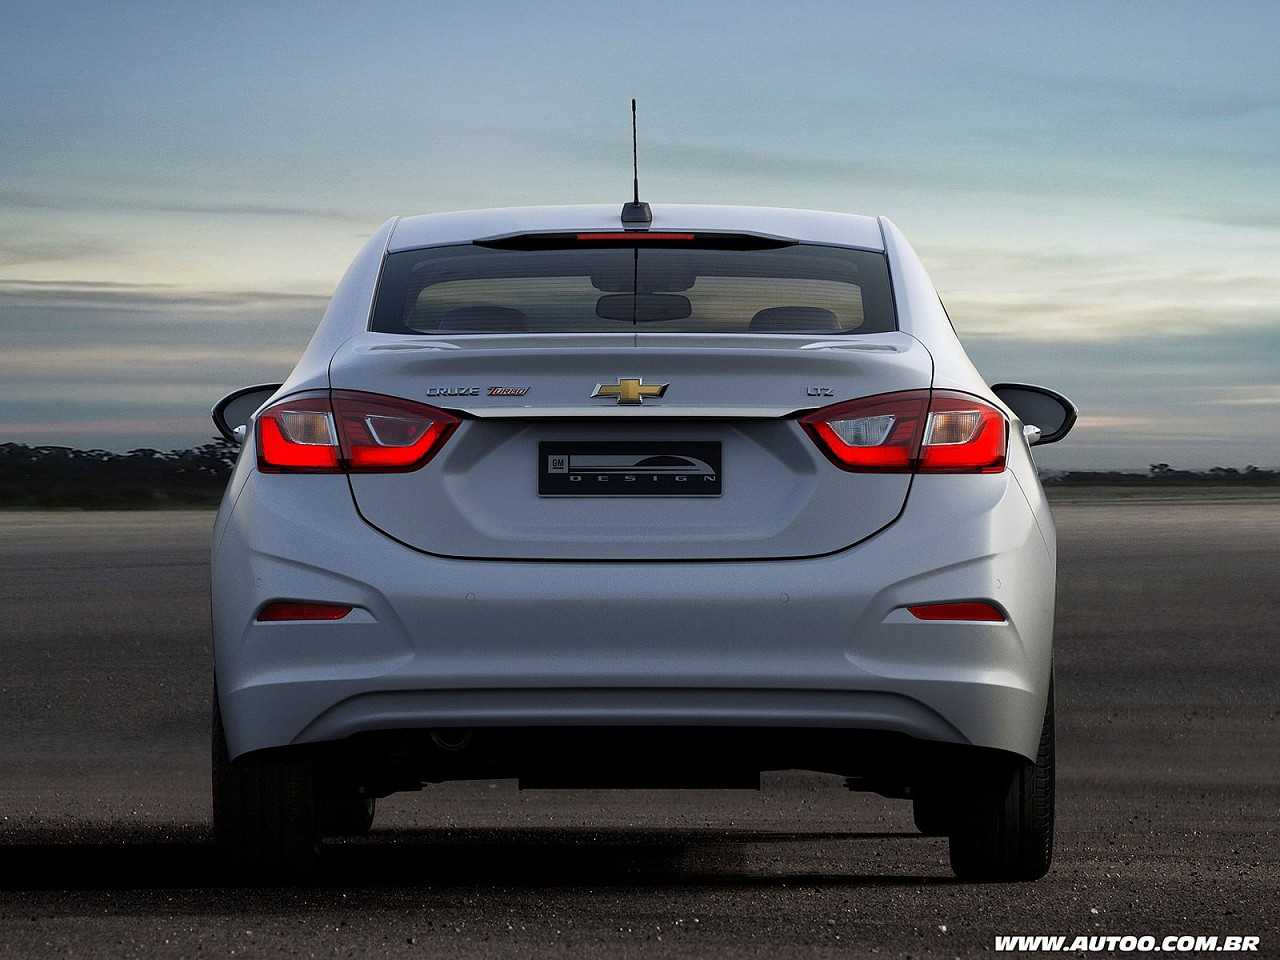 ChevroletCruze 2017 - traseira